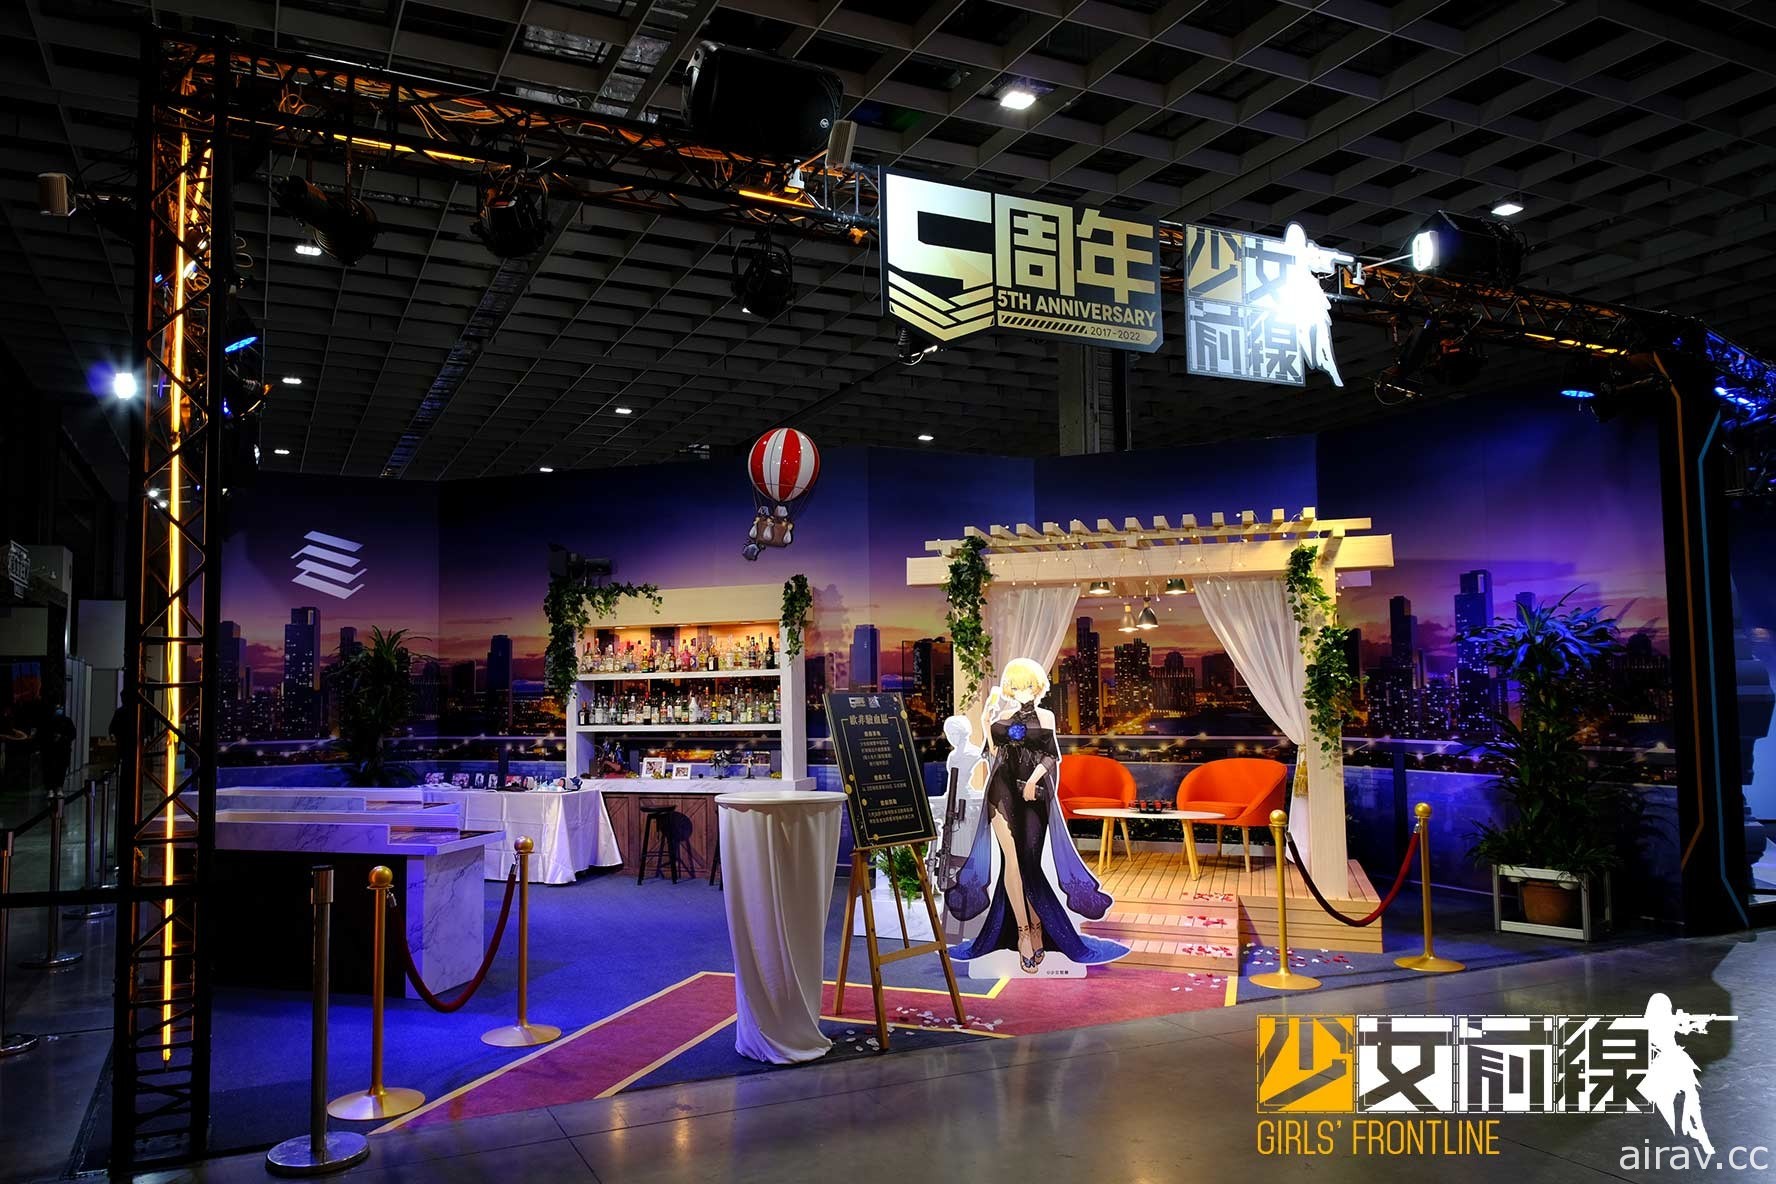 【TpGS 22】《明日方舟》《少女前線》 2022 台北國際電玩展圓滿落幕 釋出展會花絮